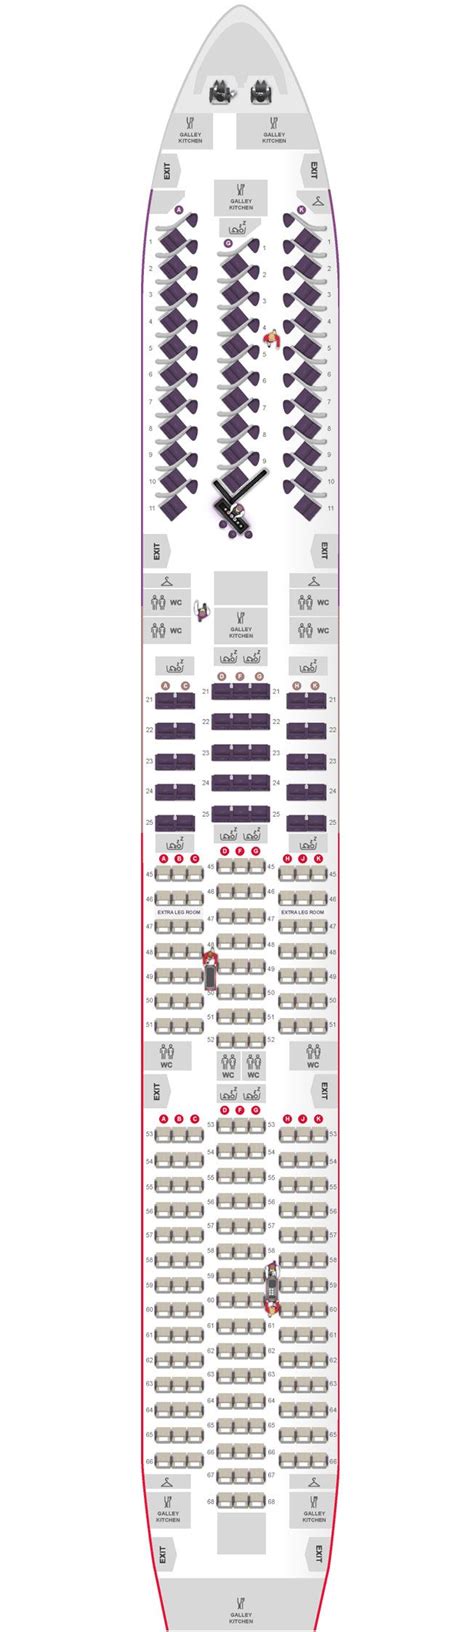 Boeing 787 Dreamliner Virgin Atlantic Seating Plan Virgin Atlantic